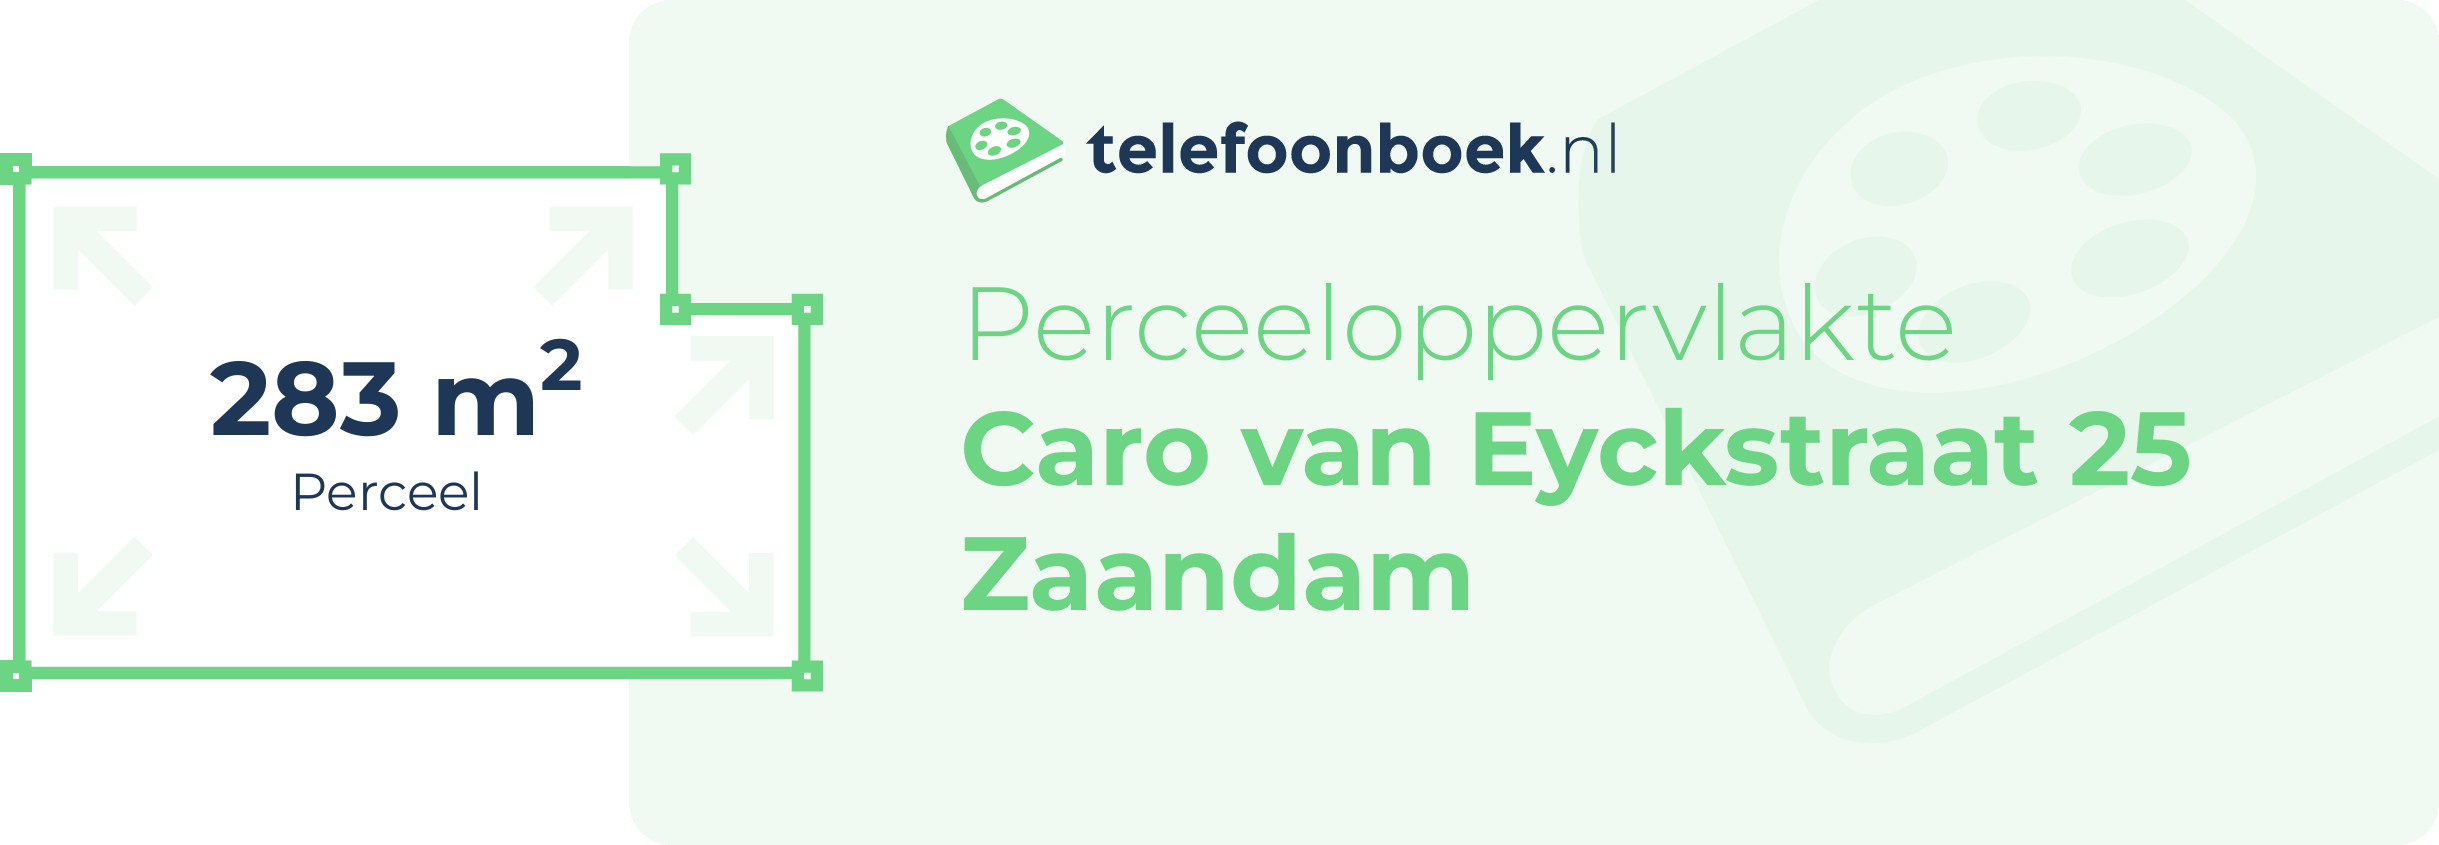 Perceeloppervlakte Caro Van Eyckstraat 25 Zaandam